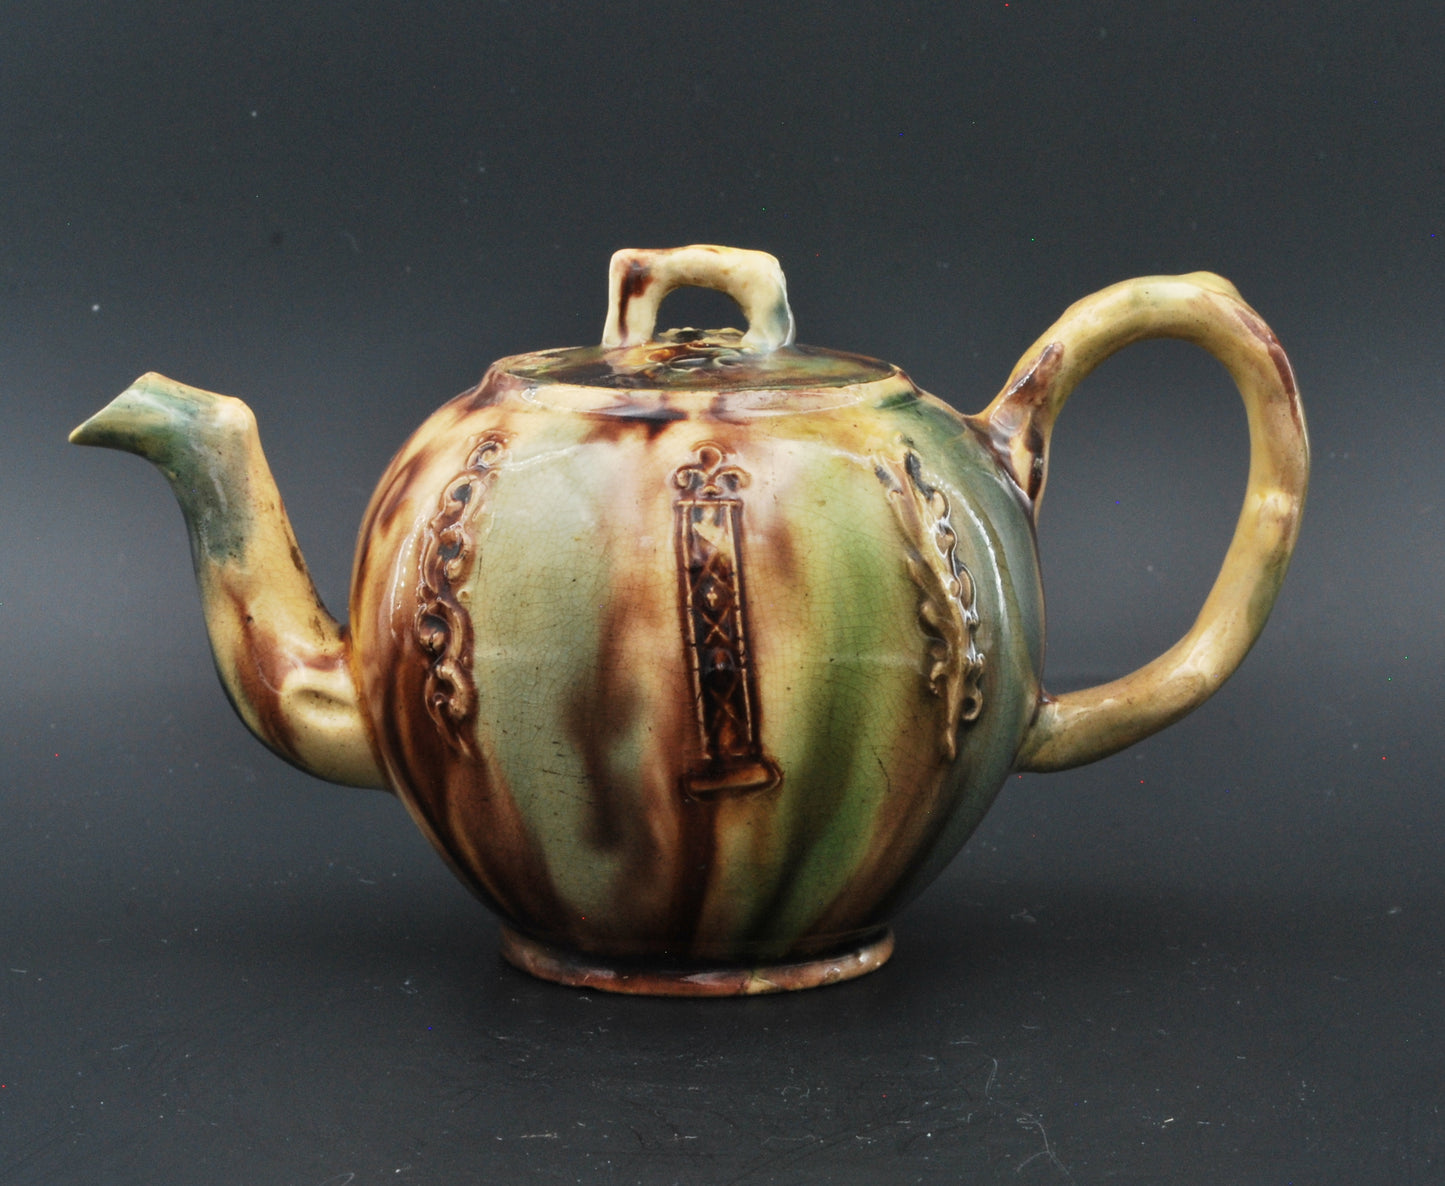 Whieldonware teapot